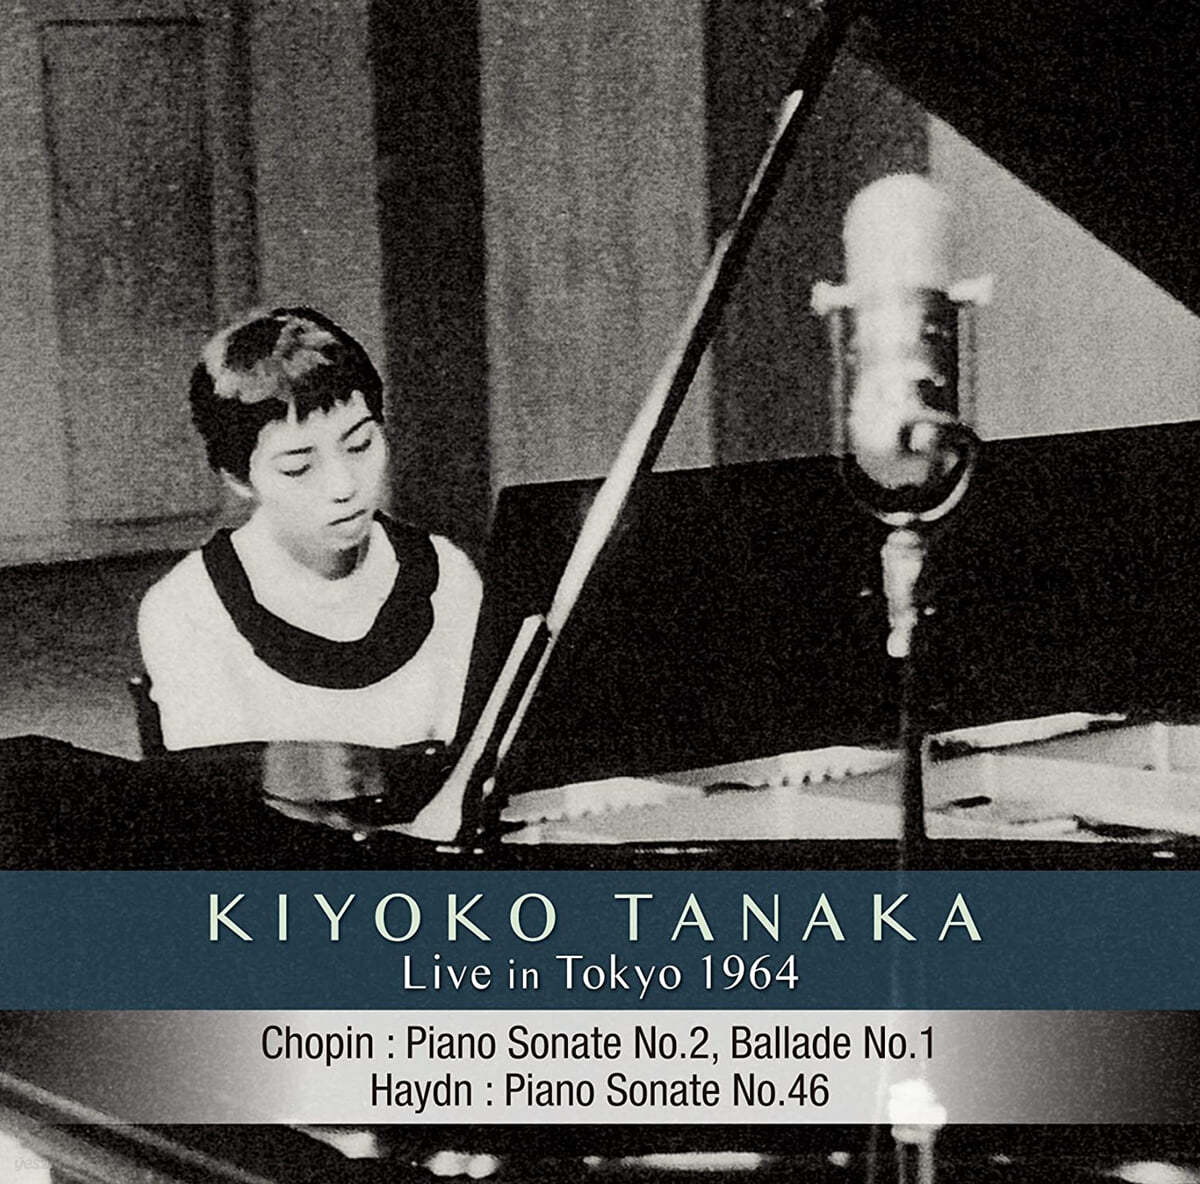 Kiyoko Tanaka 기요코 타나카 - 1964년 실황 연주 (Live in Tokyo 1964)